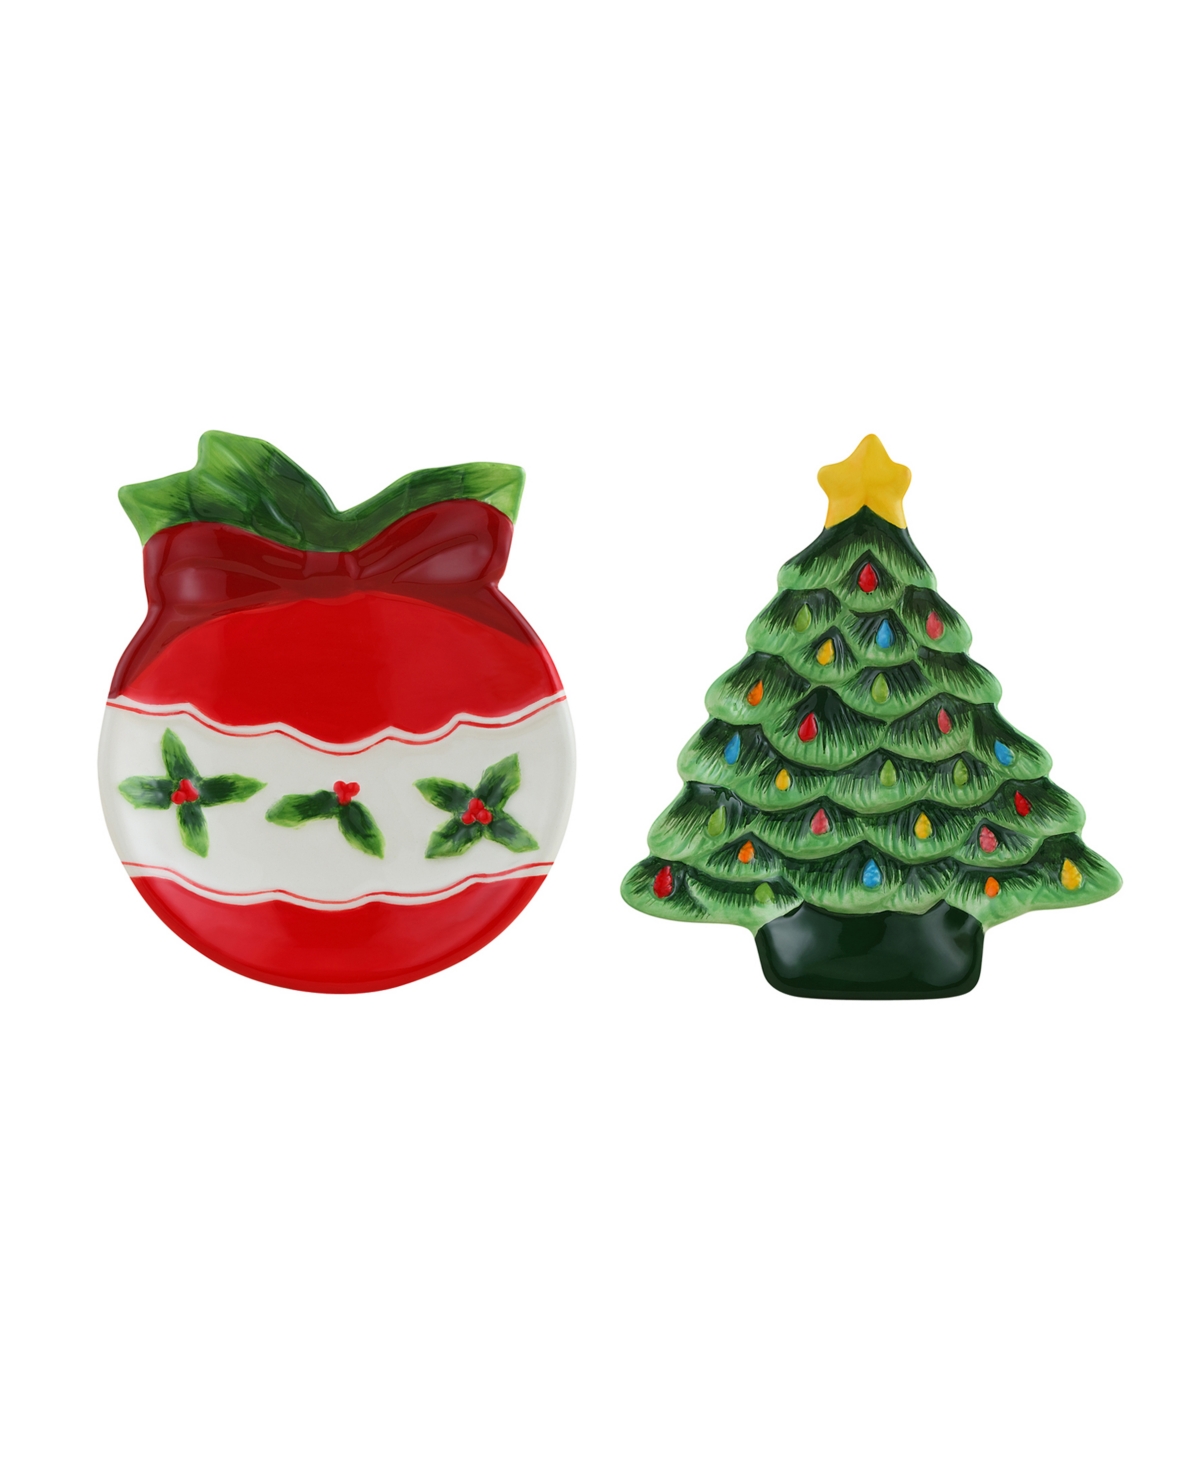 Mr. Christmas 6" Ceramic Trinket Tray Set Ornament And Tree In Multi